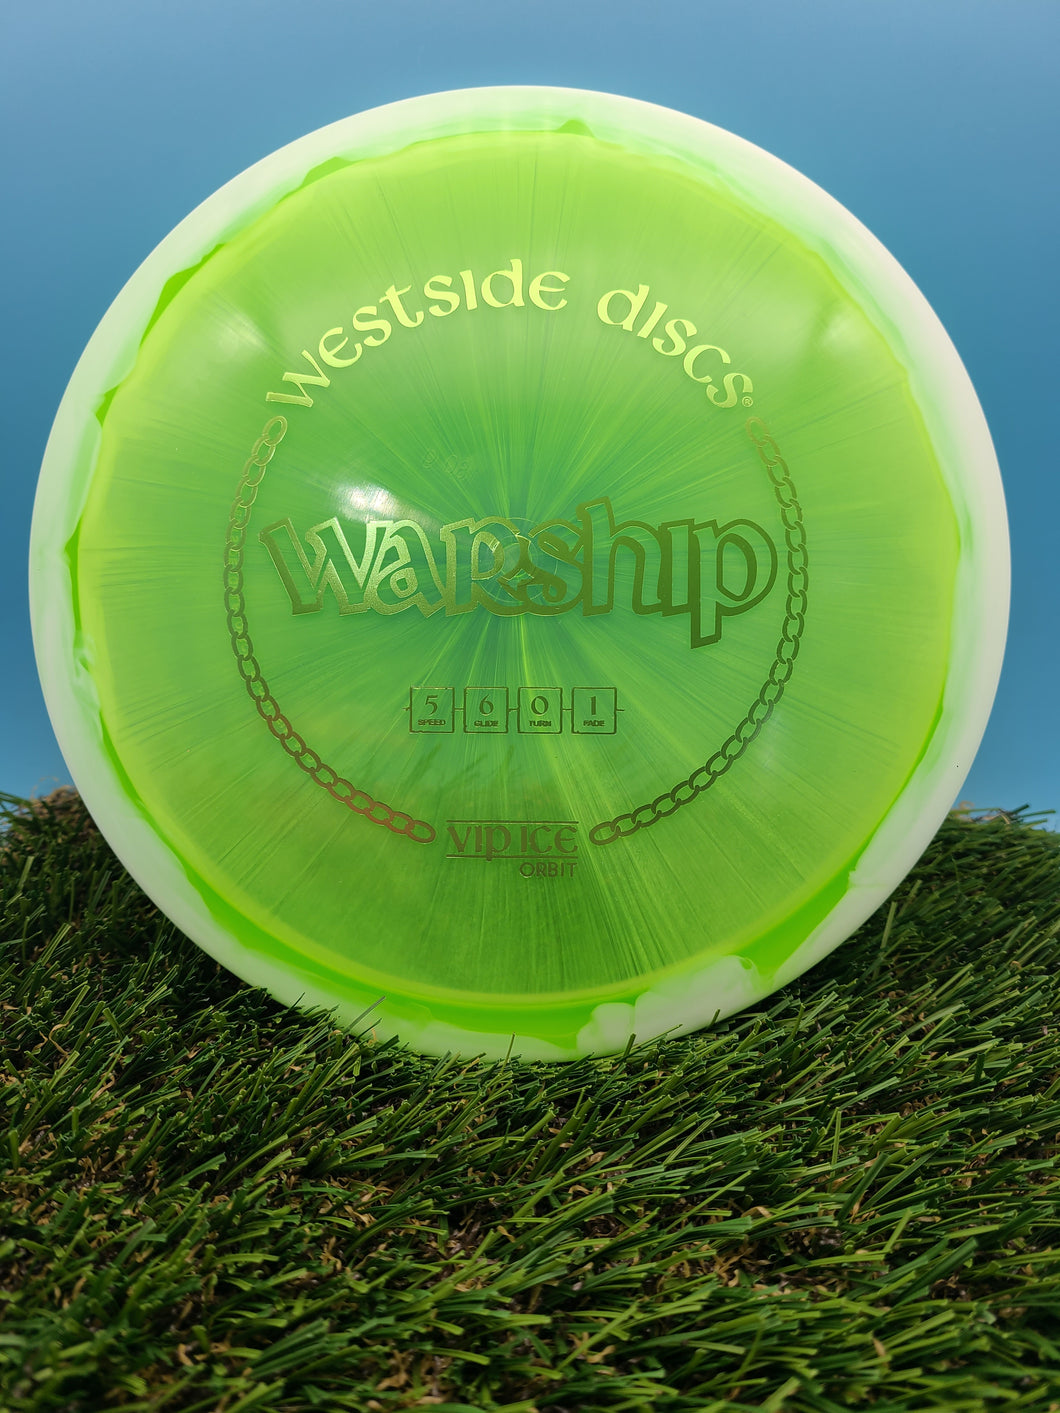 Westside Discs VIP ICE Oribit Warship Midrange